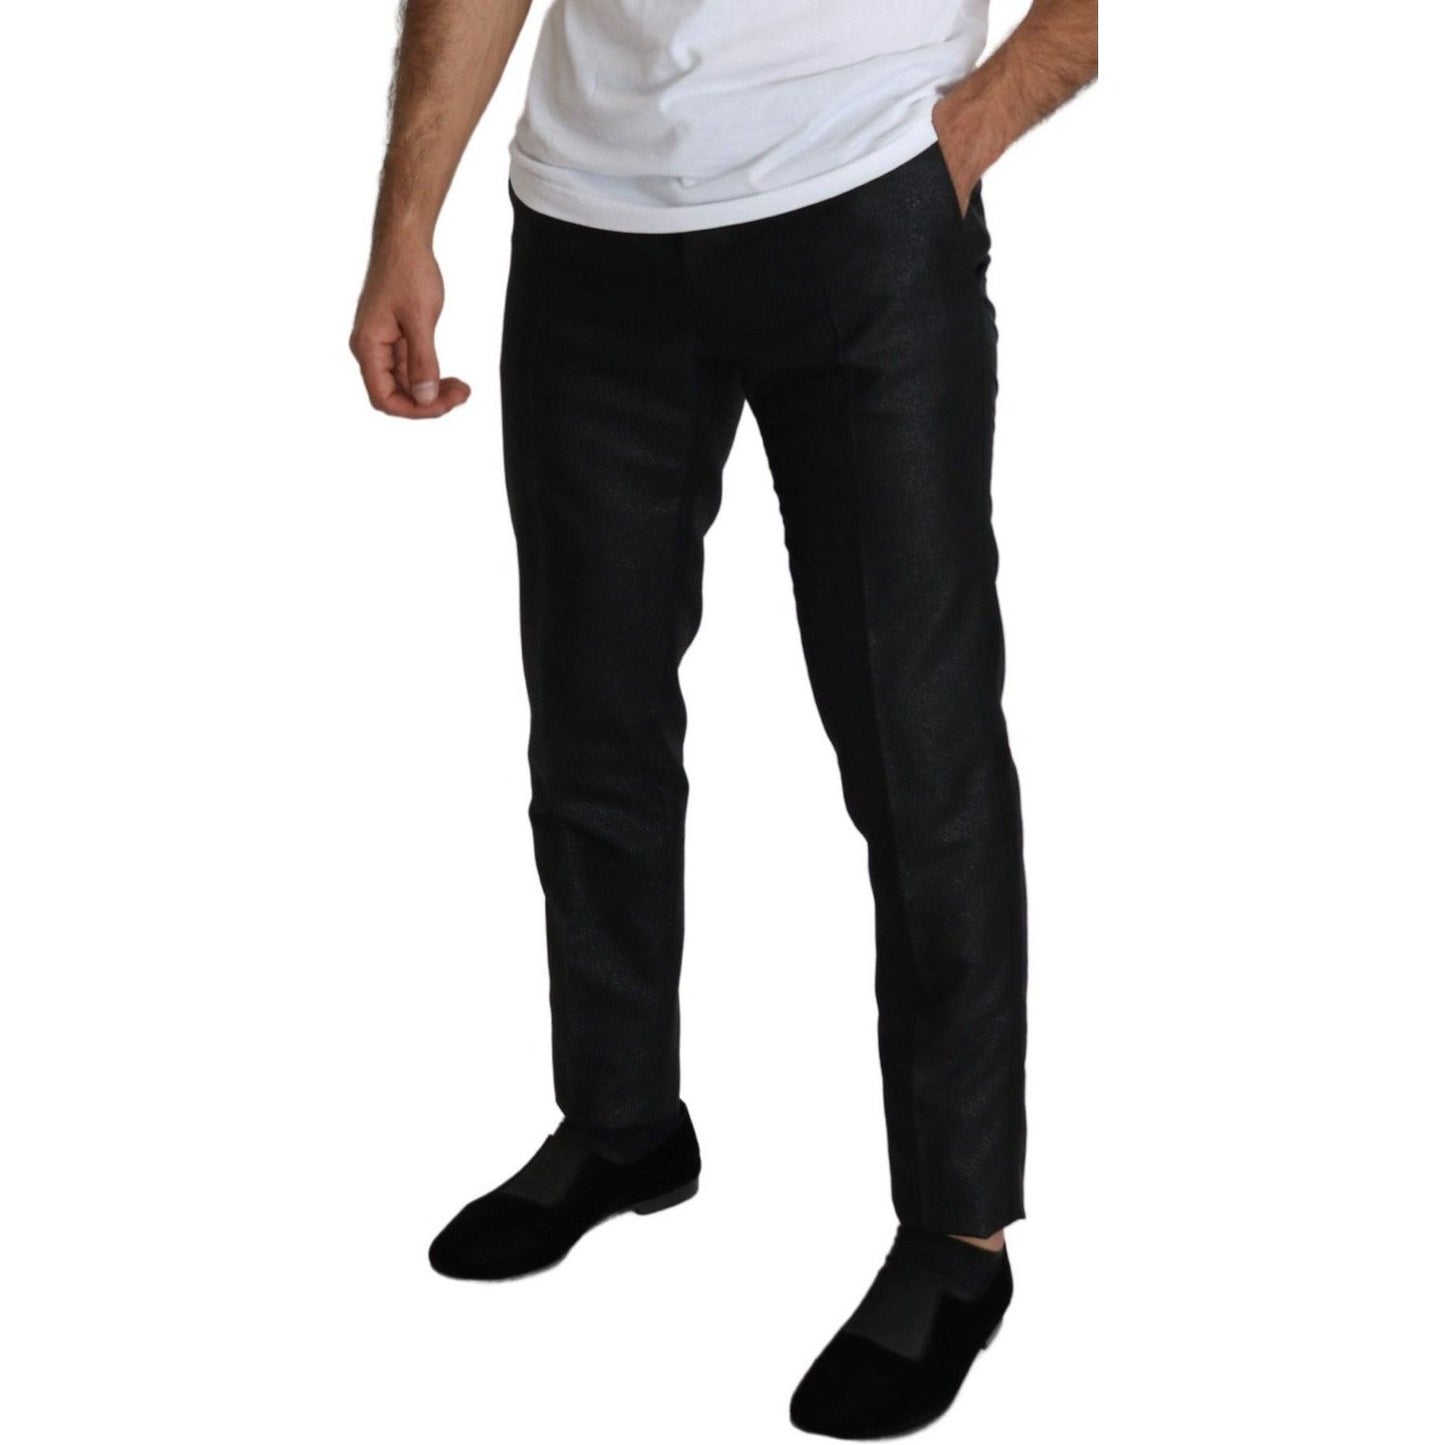 Dolce & Gabbana Elegant Metallic Black Dress Pants Jeans & Pants black-metallic-skinny-trouser-dress IMG_2242-f8f02717-4ee.jpg